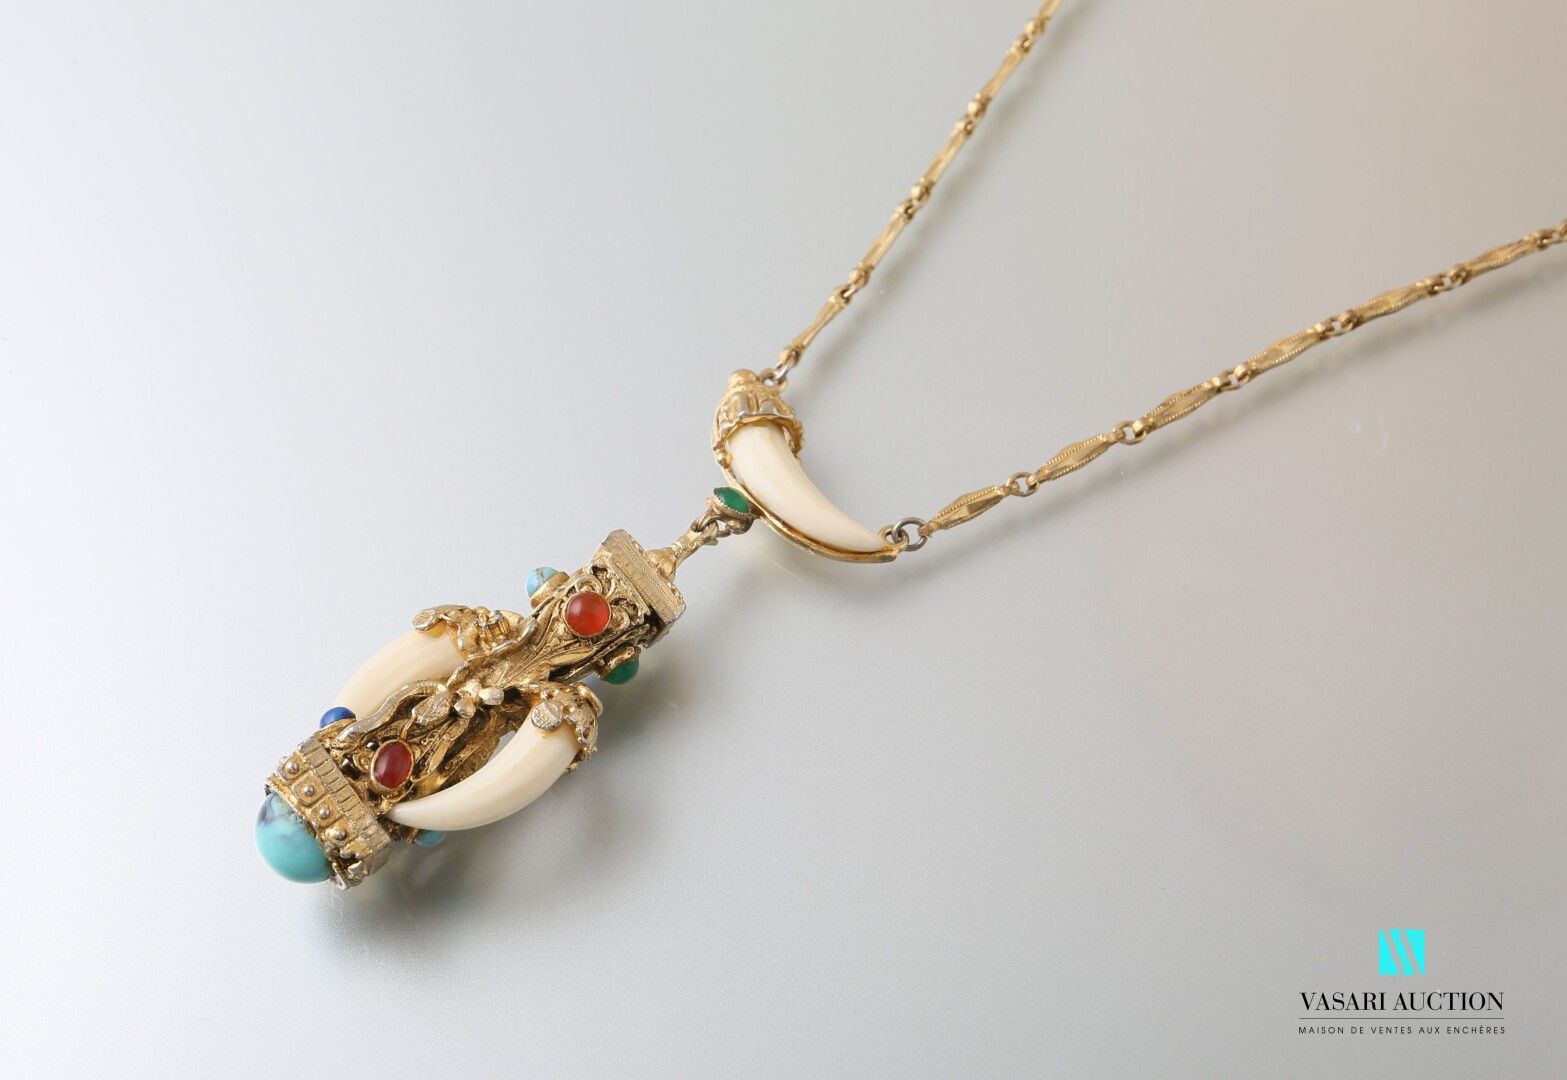 Null 镀金金属项链，链子上装饰有条状物，托着一个装饰有花朵、蛇的Diabolo形式的吊坠，装饰有凸圆形和仿制牙，扣环。

长度：39厘米